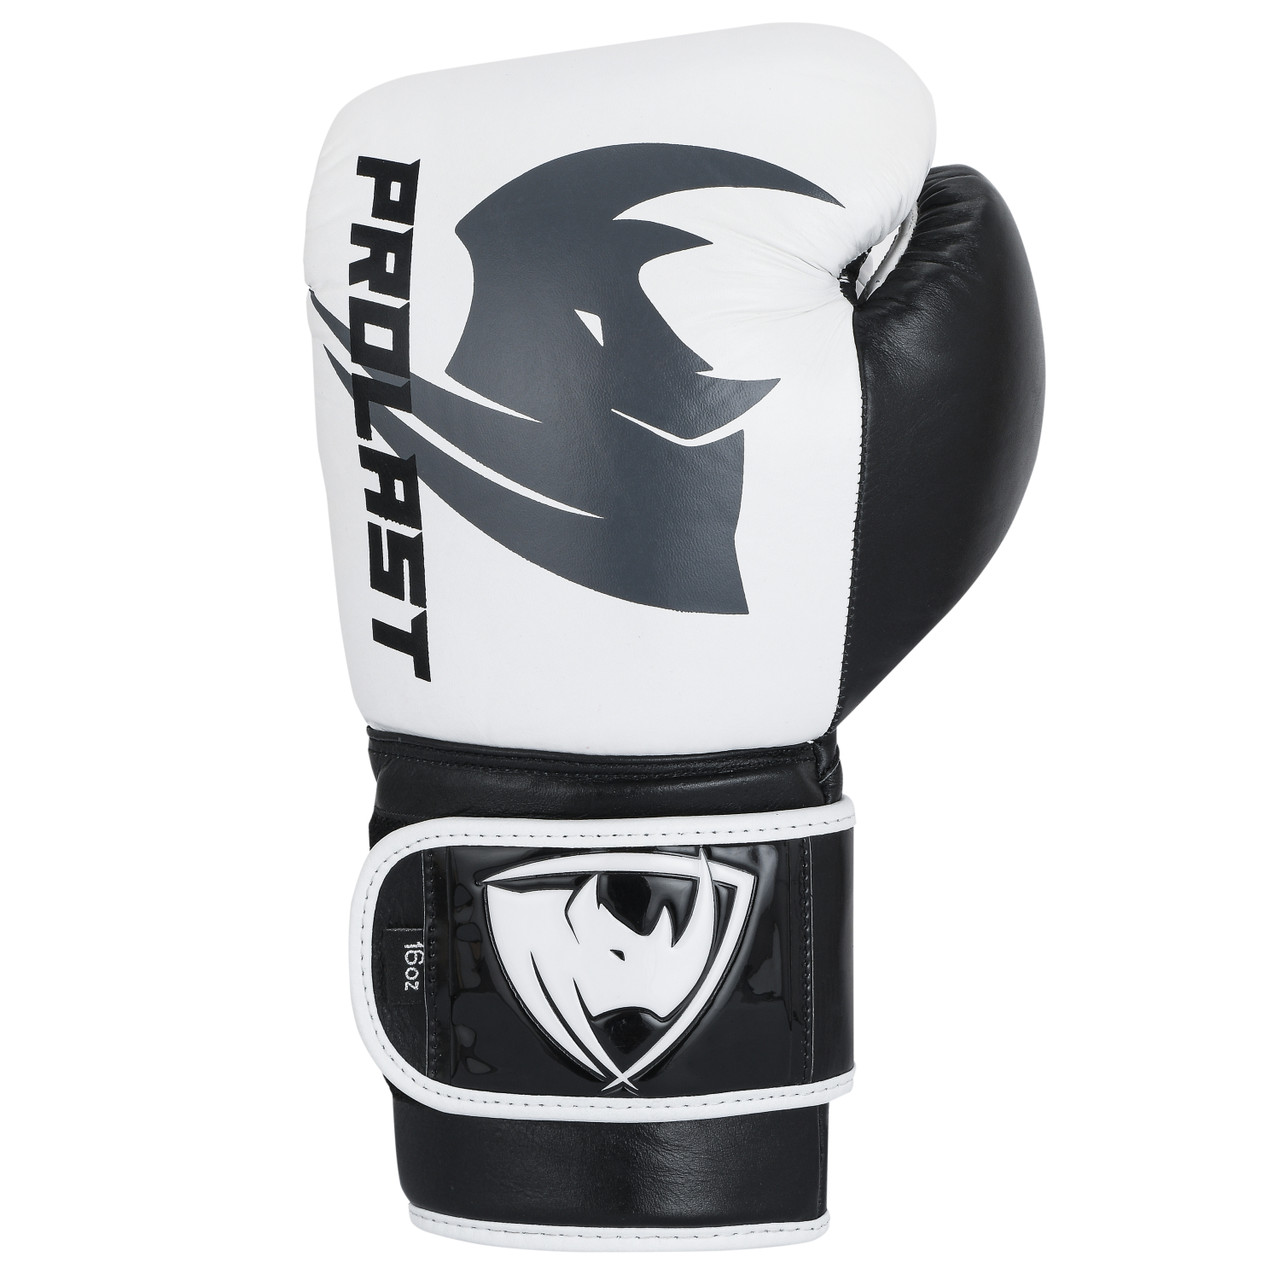 LX Boxing Gloves W/ Hook and Loop Closure Black